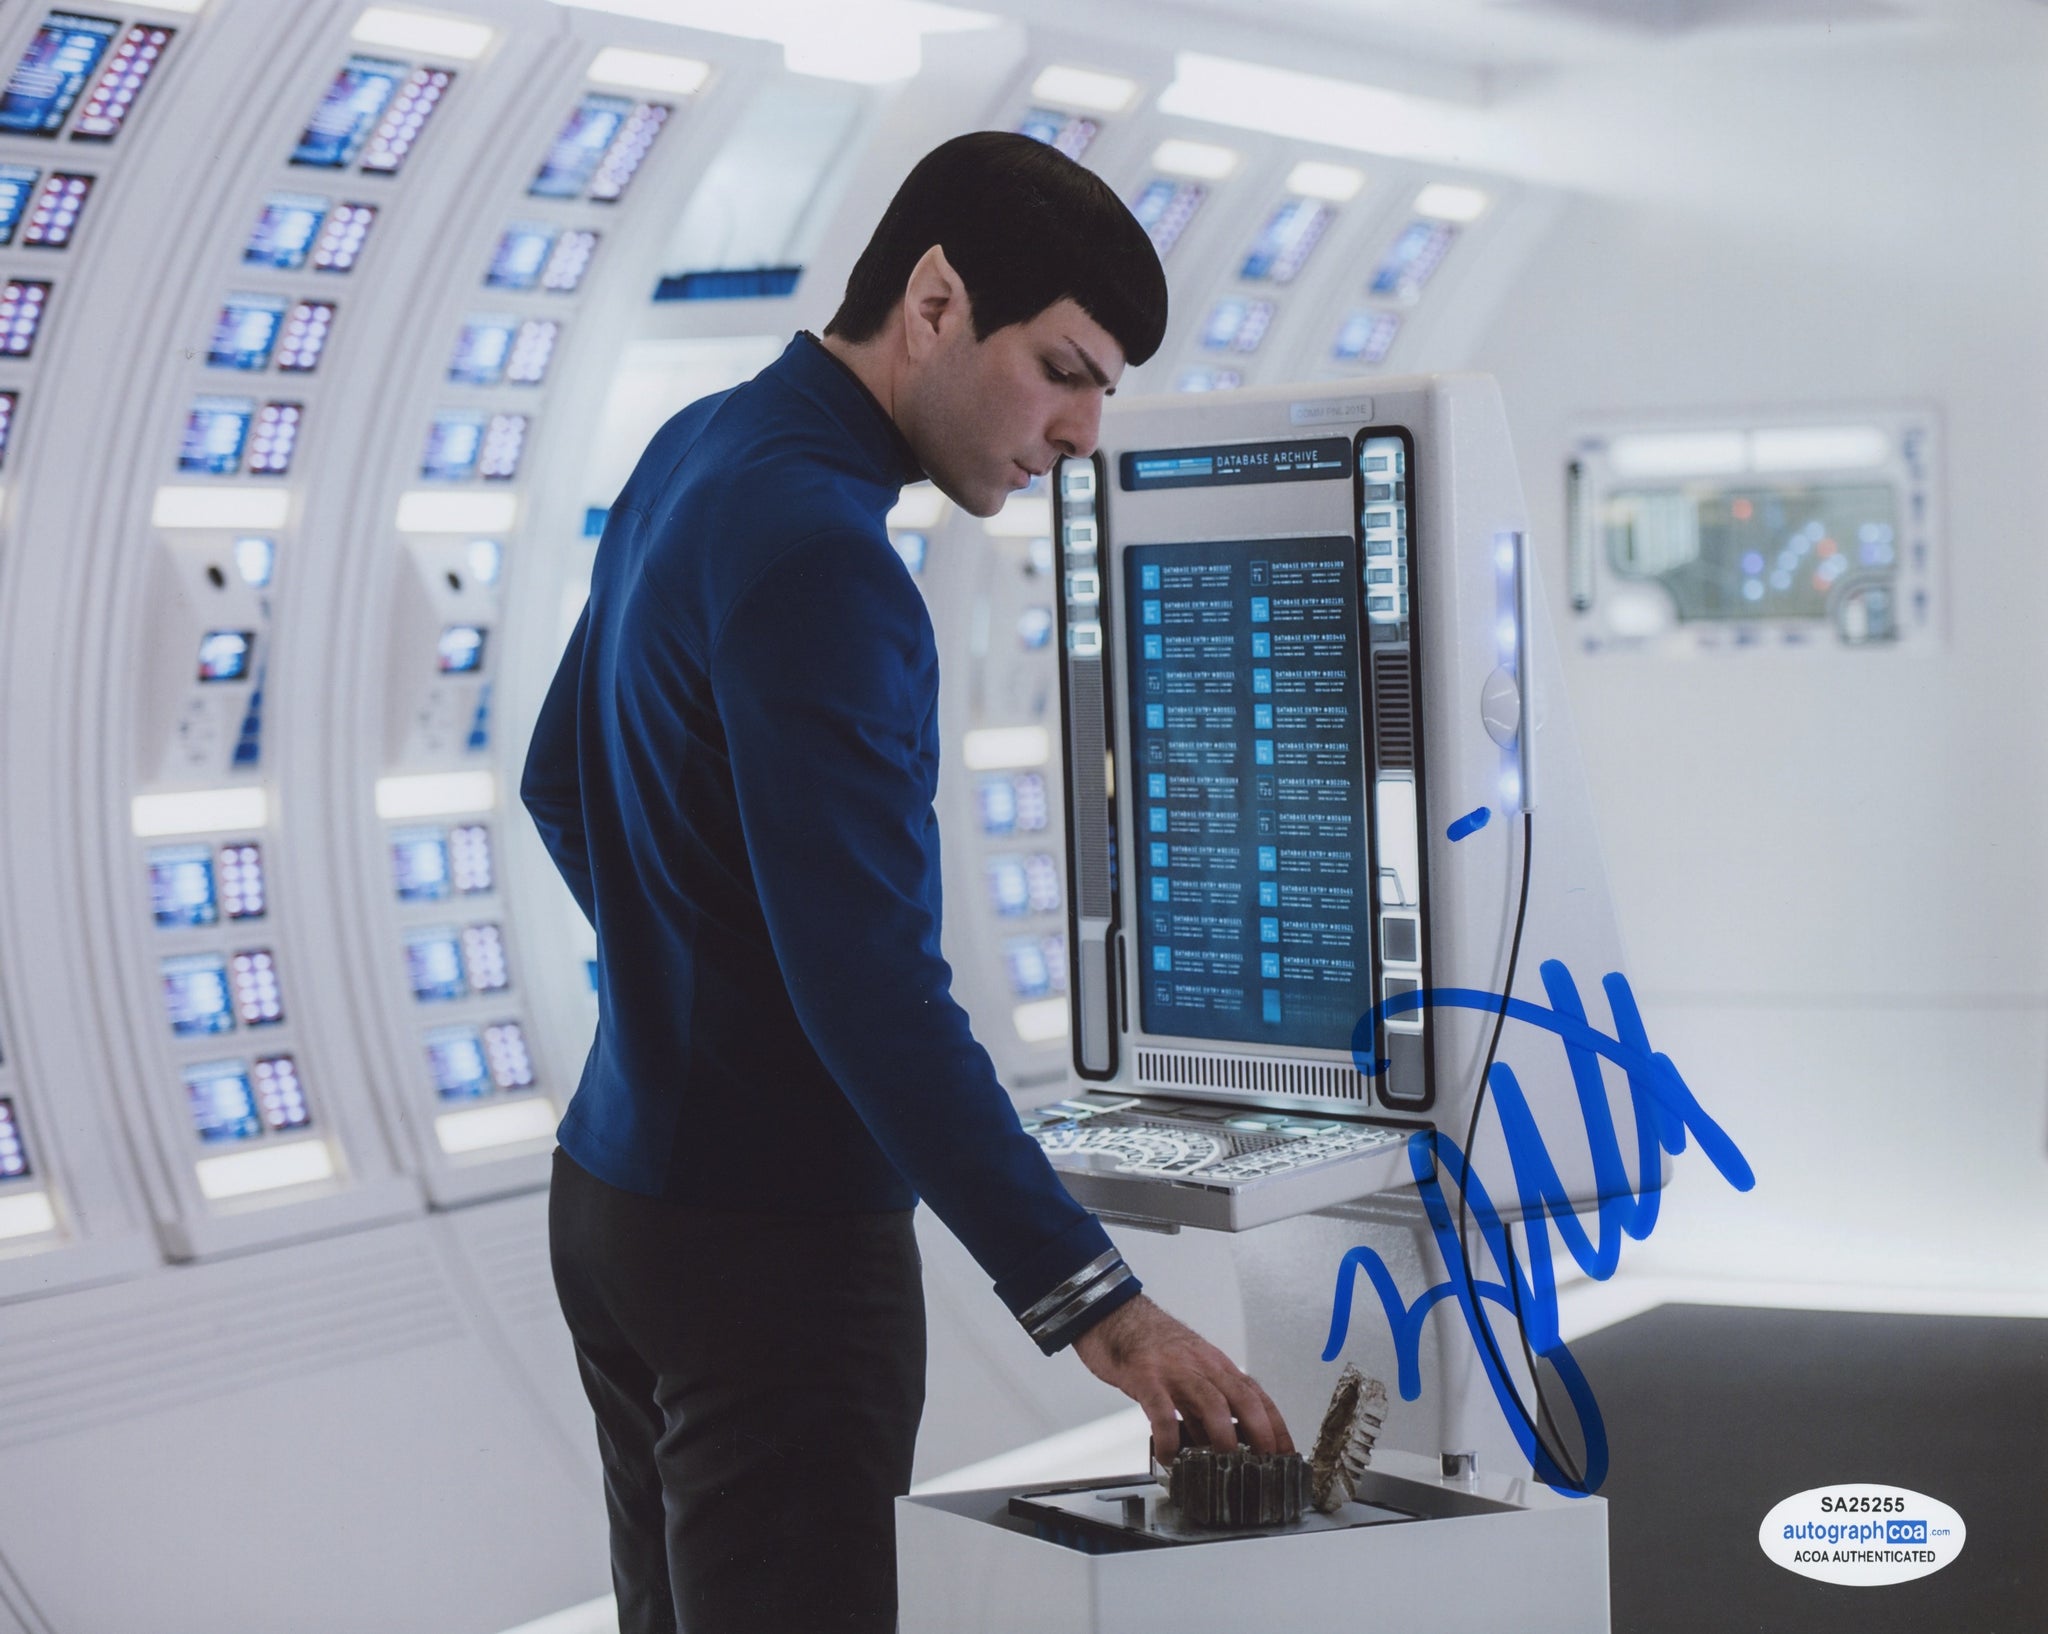 Zachary Quinto Star Trek Signed Autograph 8x10 Photo ACOA #7 - Outlaw Hobbies Authentic Autographs